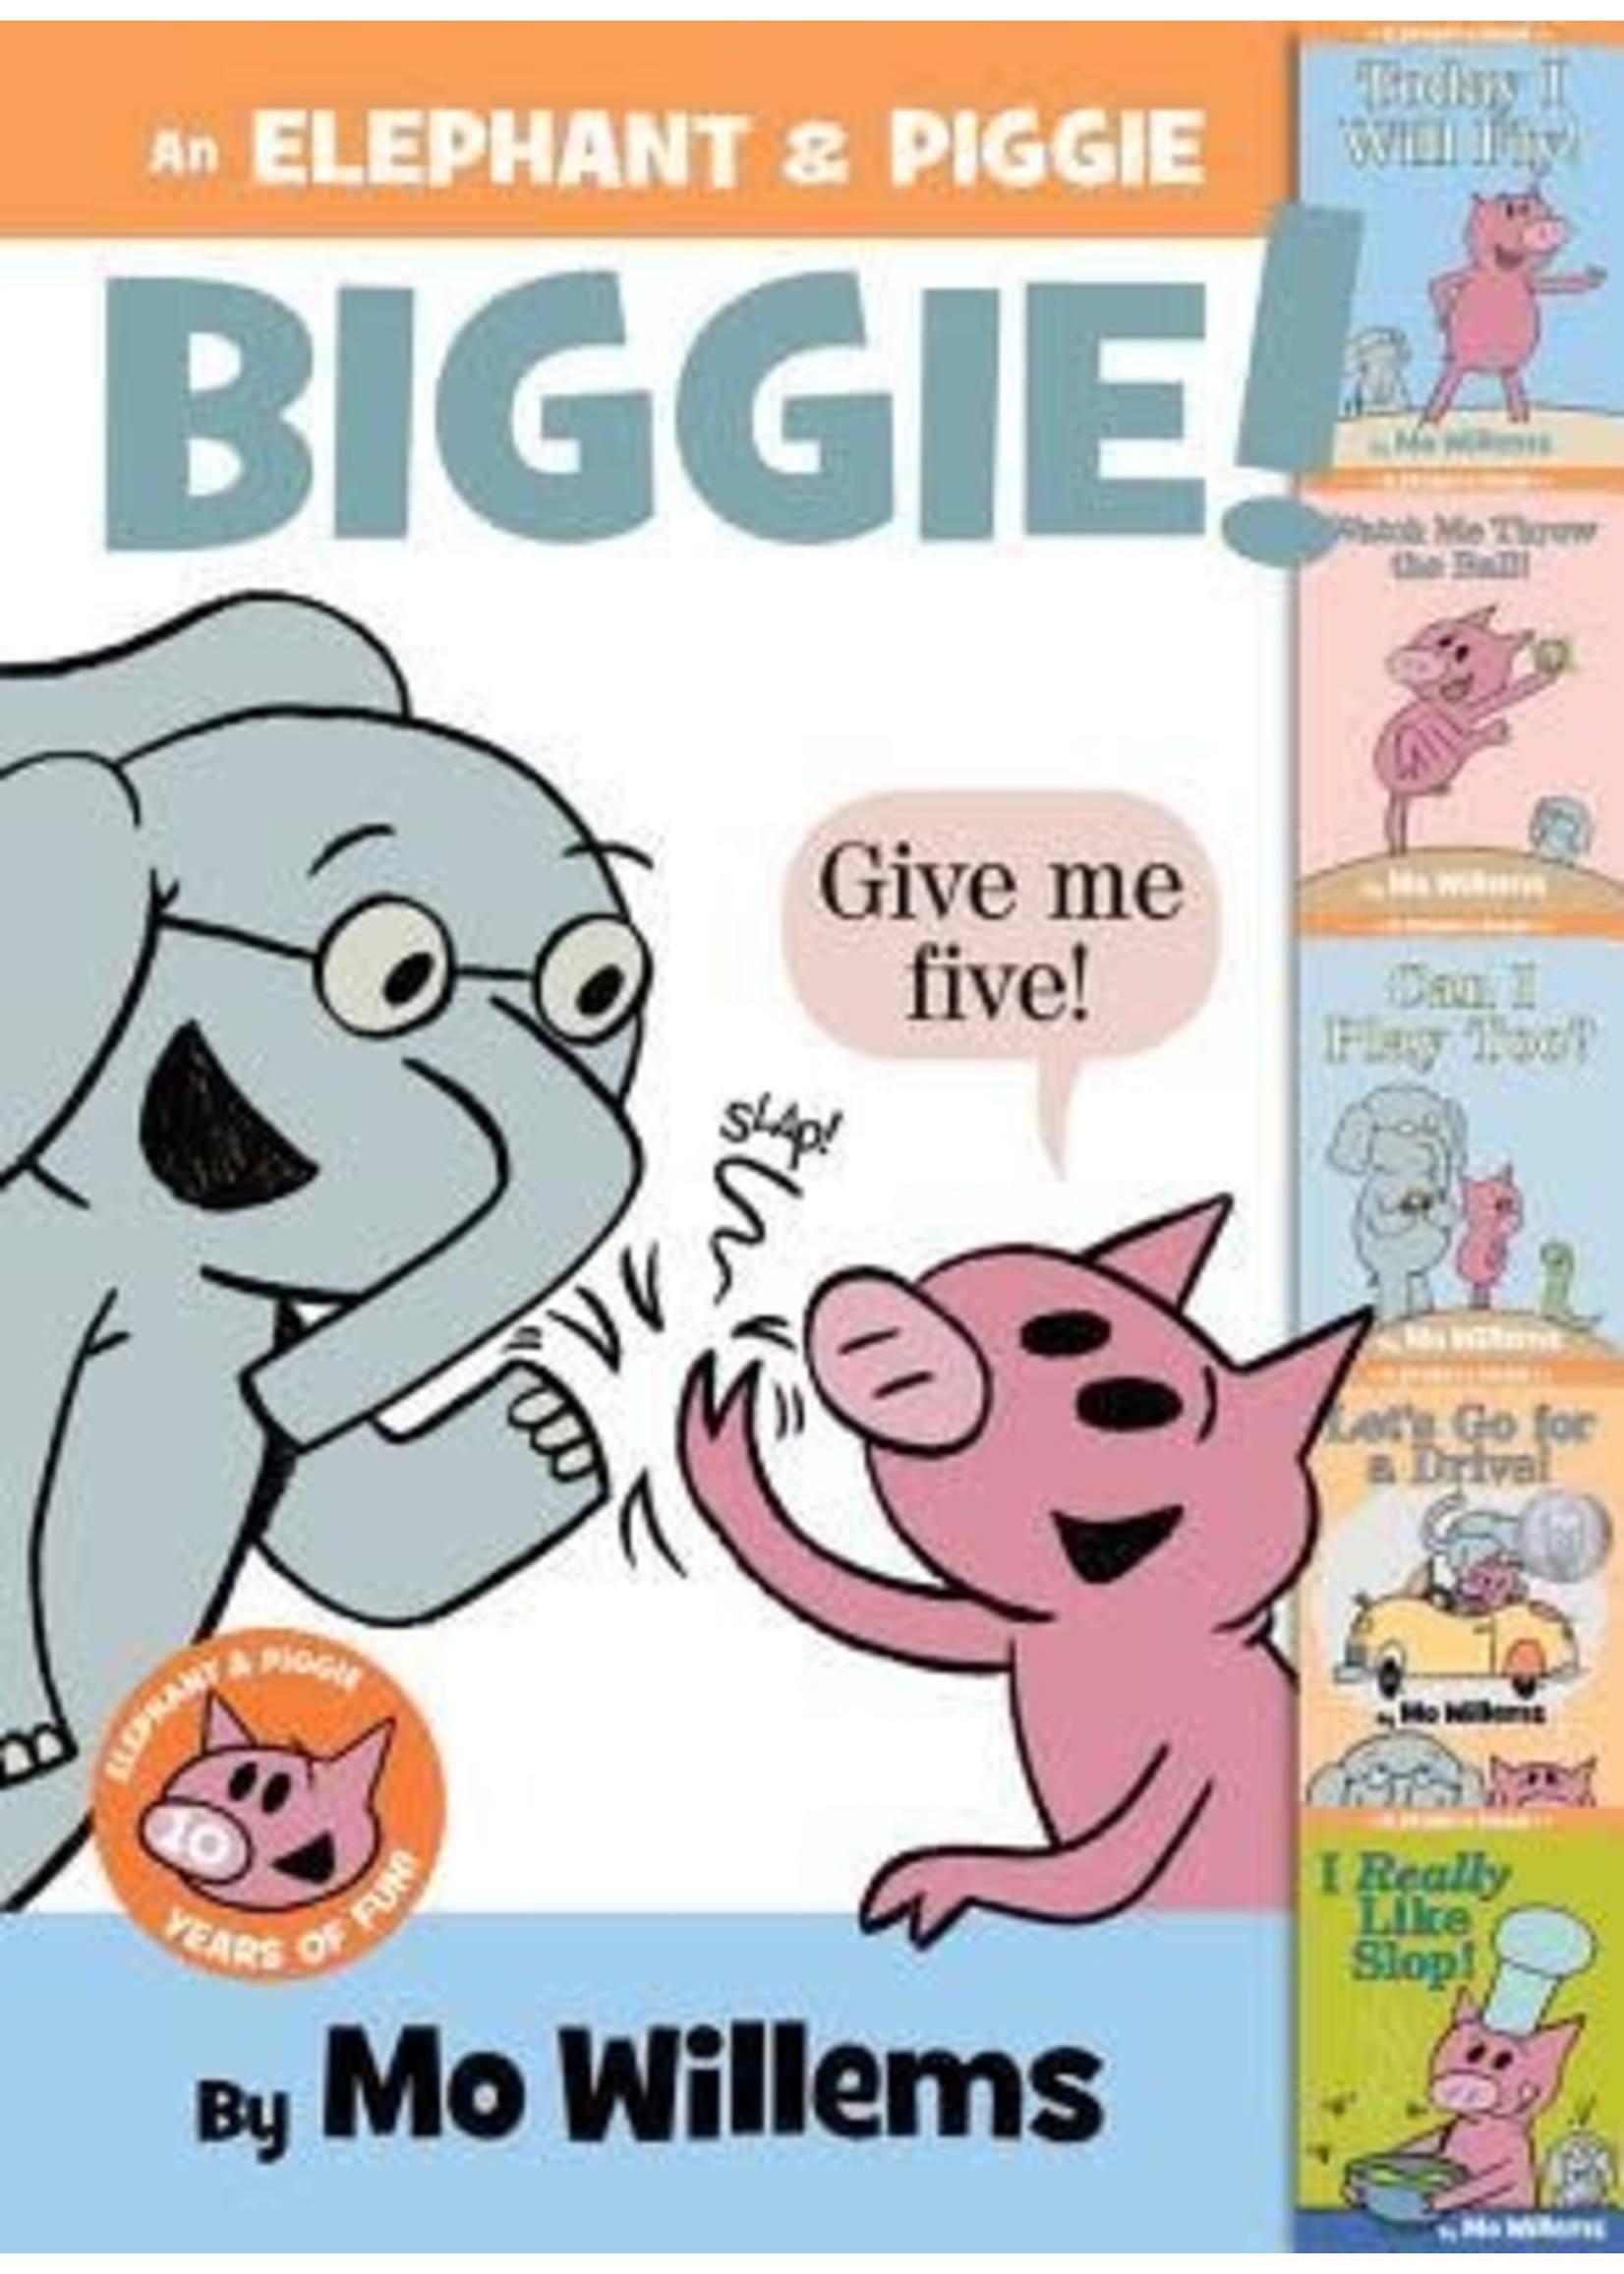 An Elephant & Piggie Biggie Volume 1 by Mo Willems